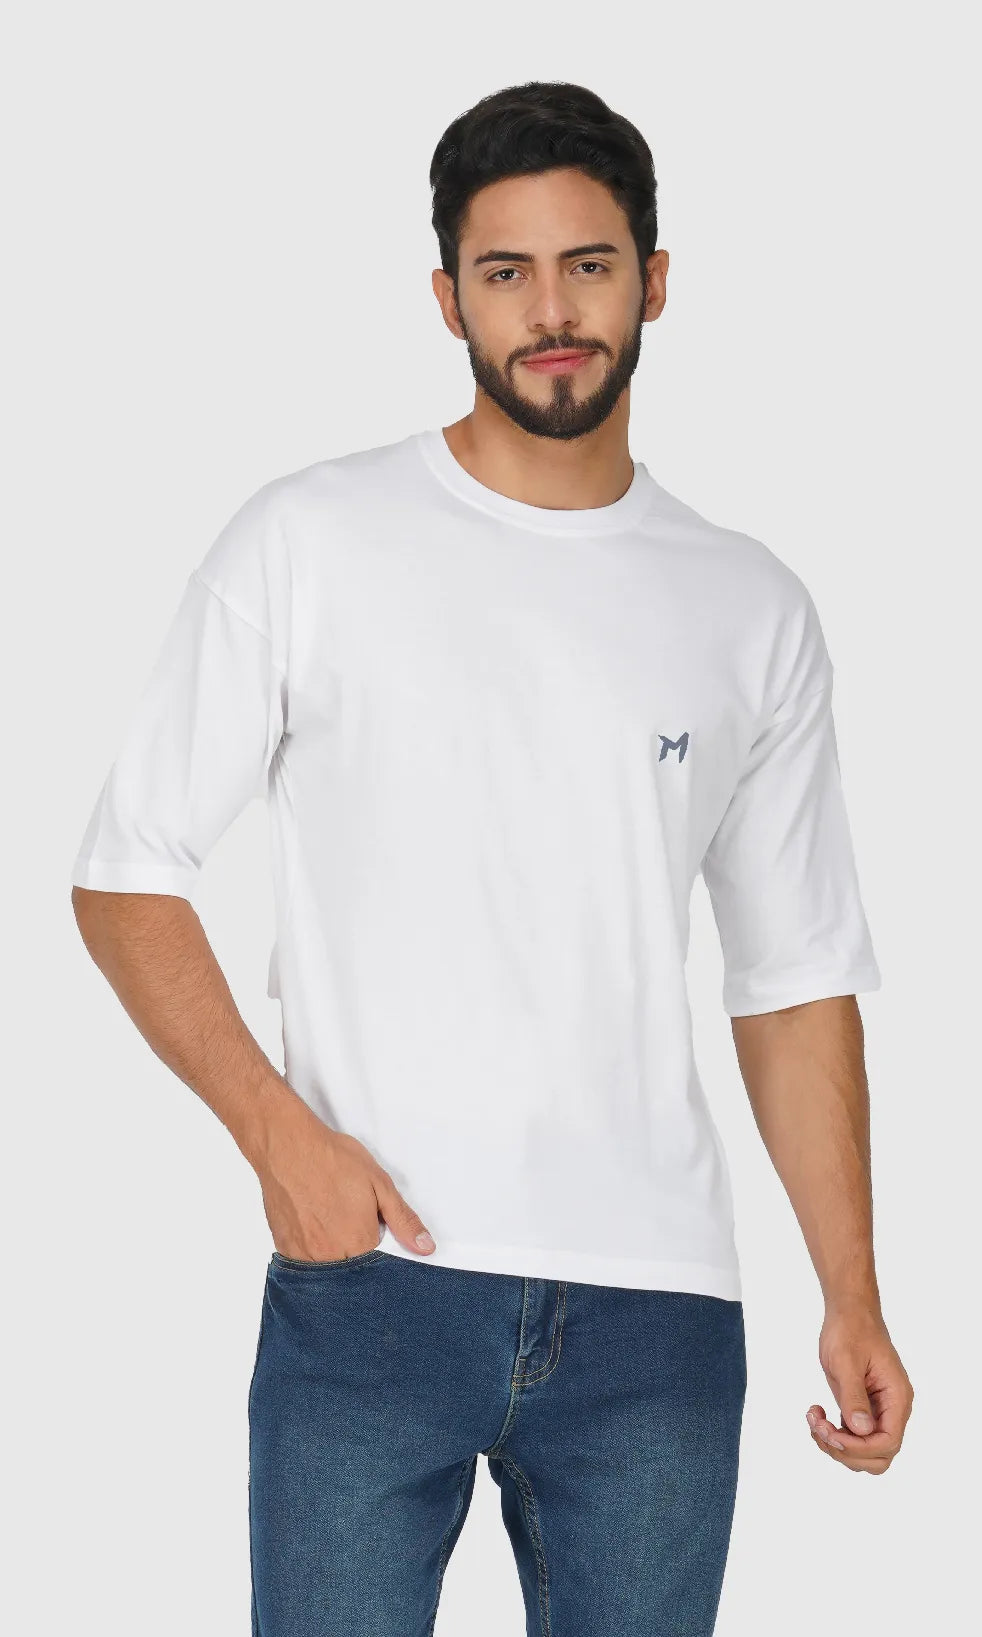 Mebadass Cotton Men's OverSized/Baggy Dropshoulder T-shirts - White